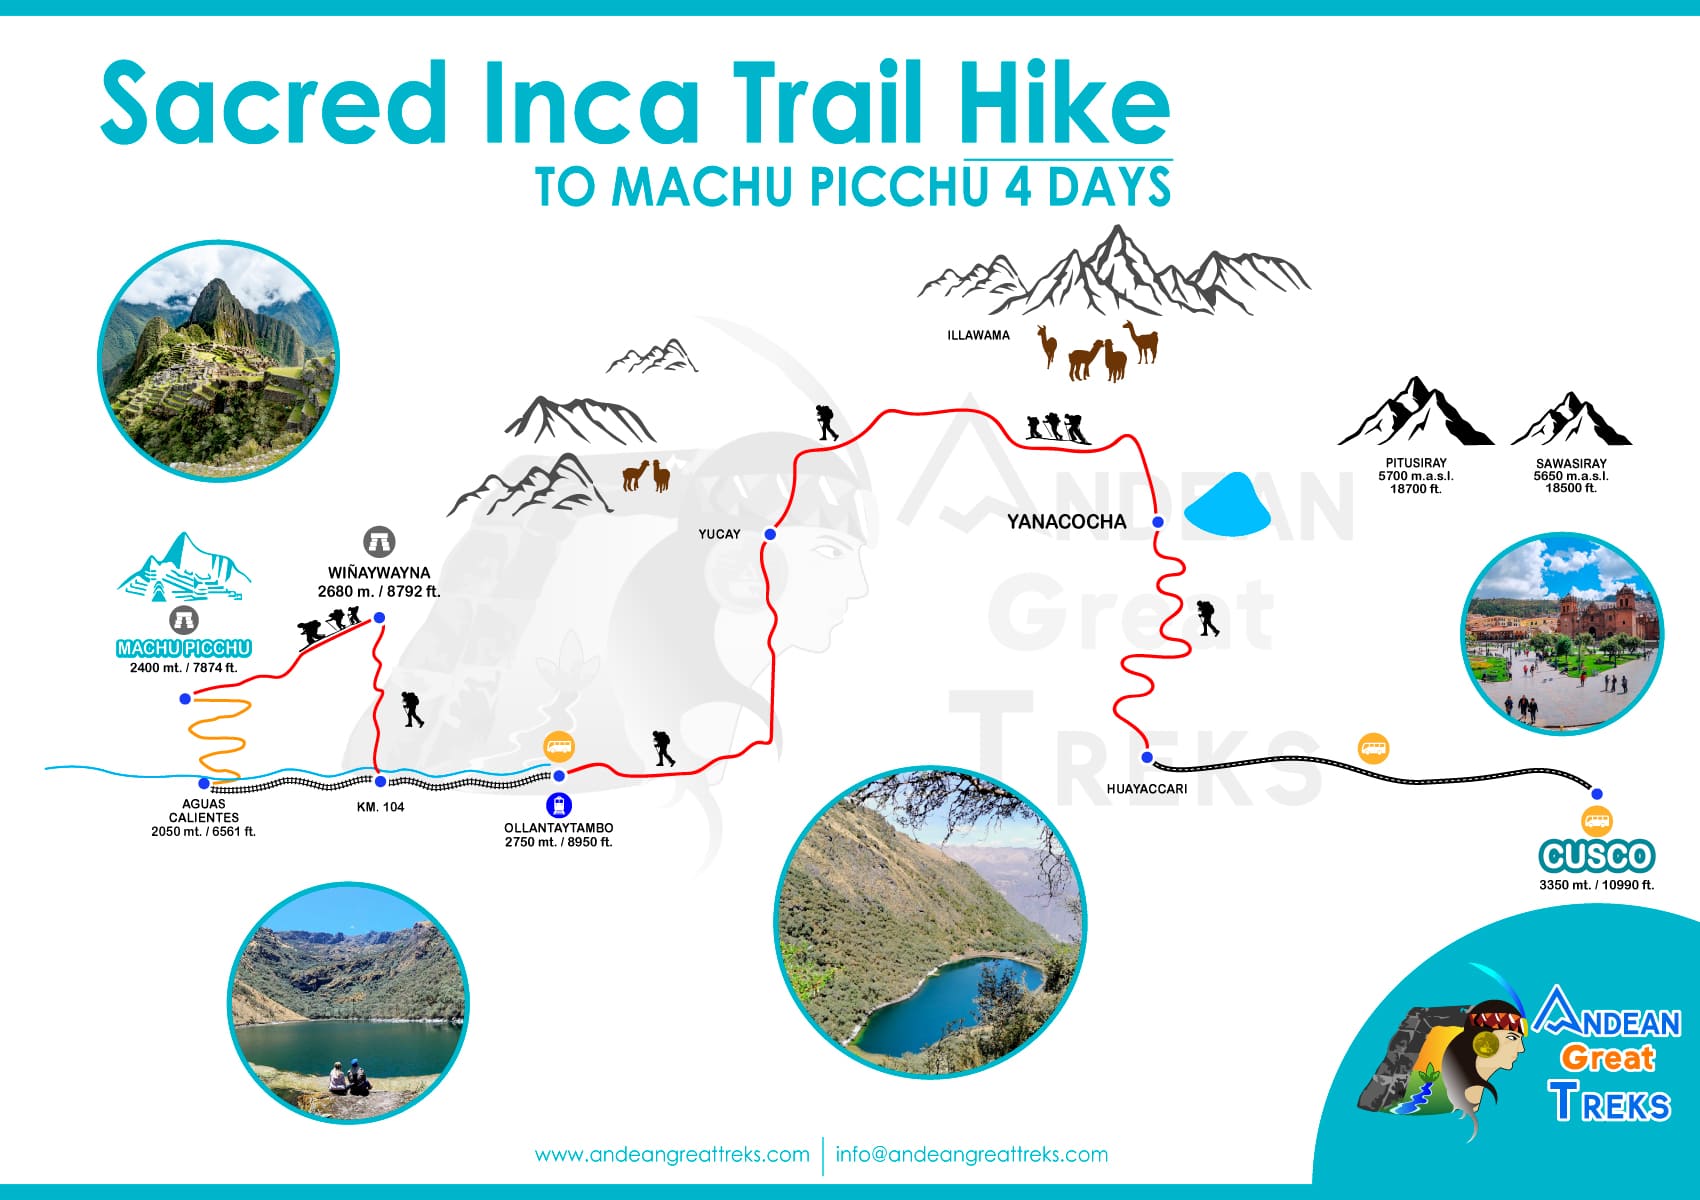 SACRED-INCA-TRAIL-HIKE-TO-MACHU-PICCHU